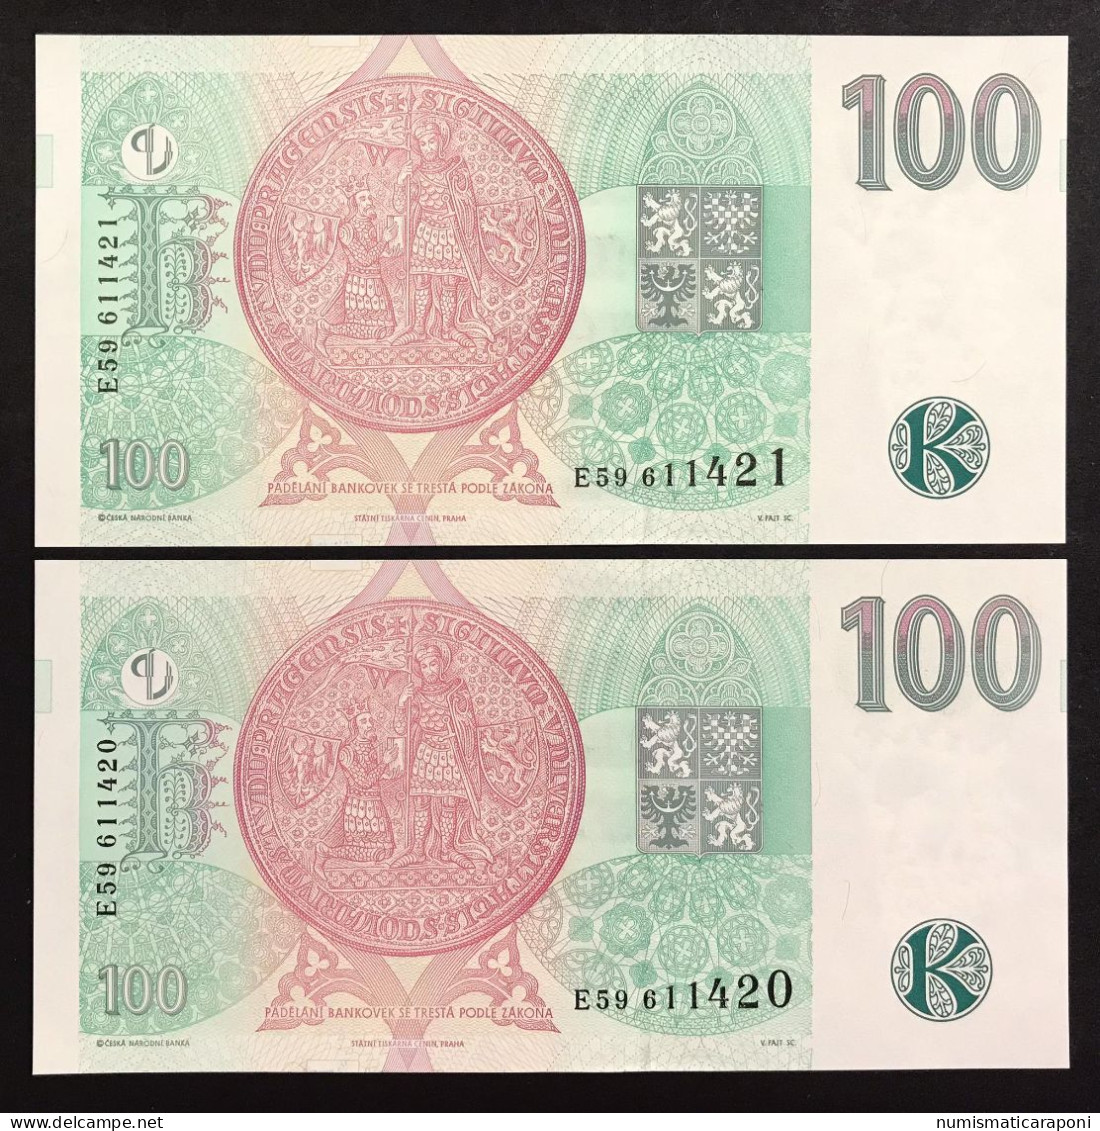 Ceskoslovenska CECOSLOVACCHIA  100 KORUN 1997 2 Es. Consecutive Fds Lotto 4598 - Tchécoslovaquie